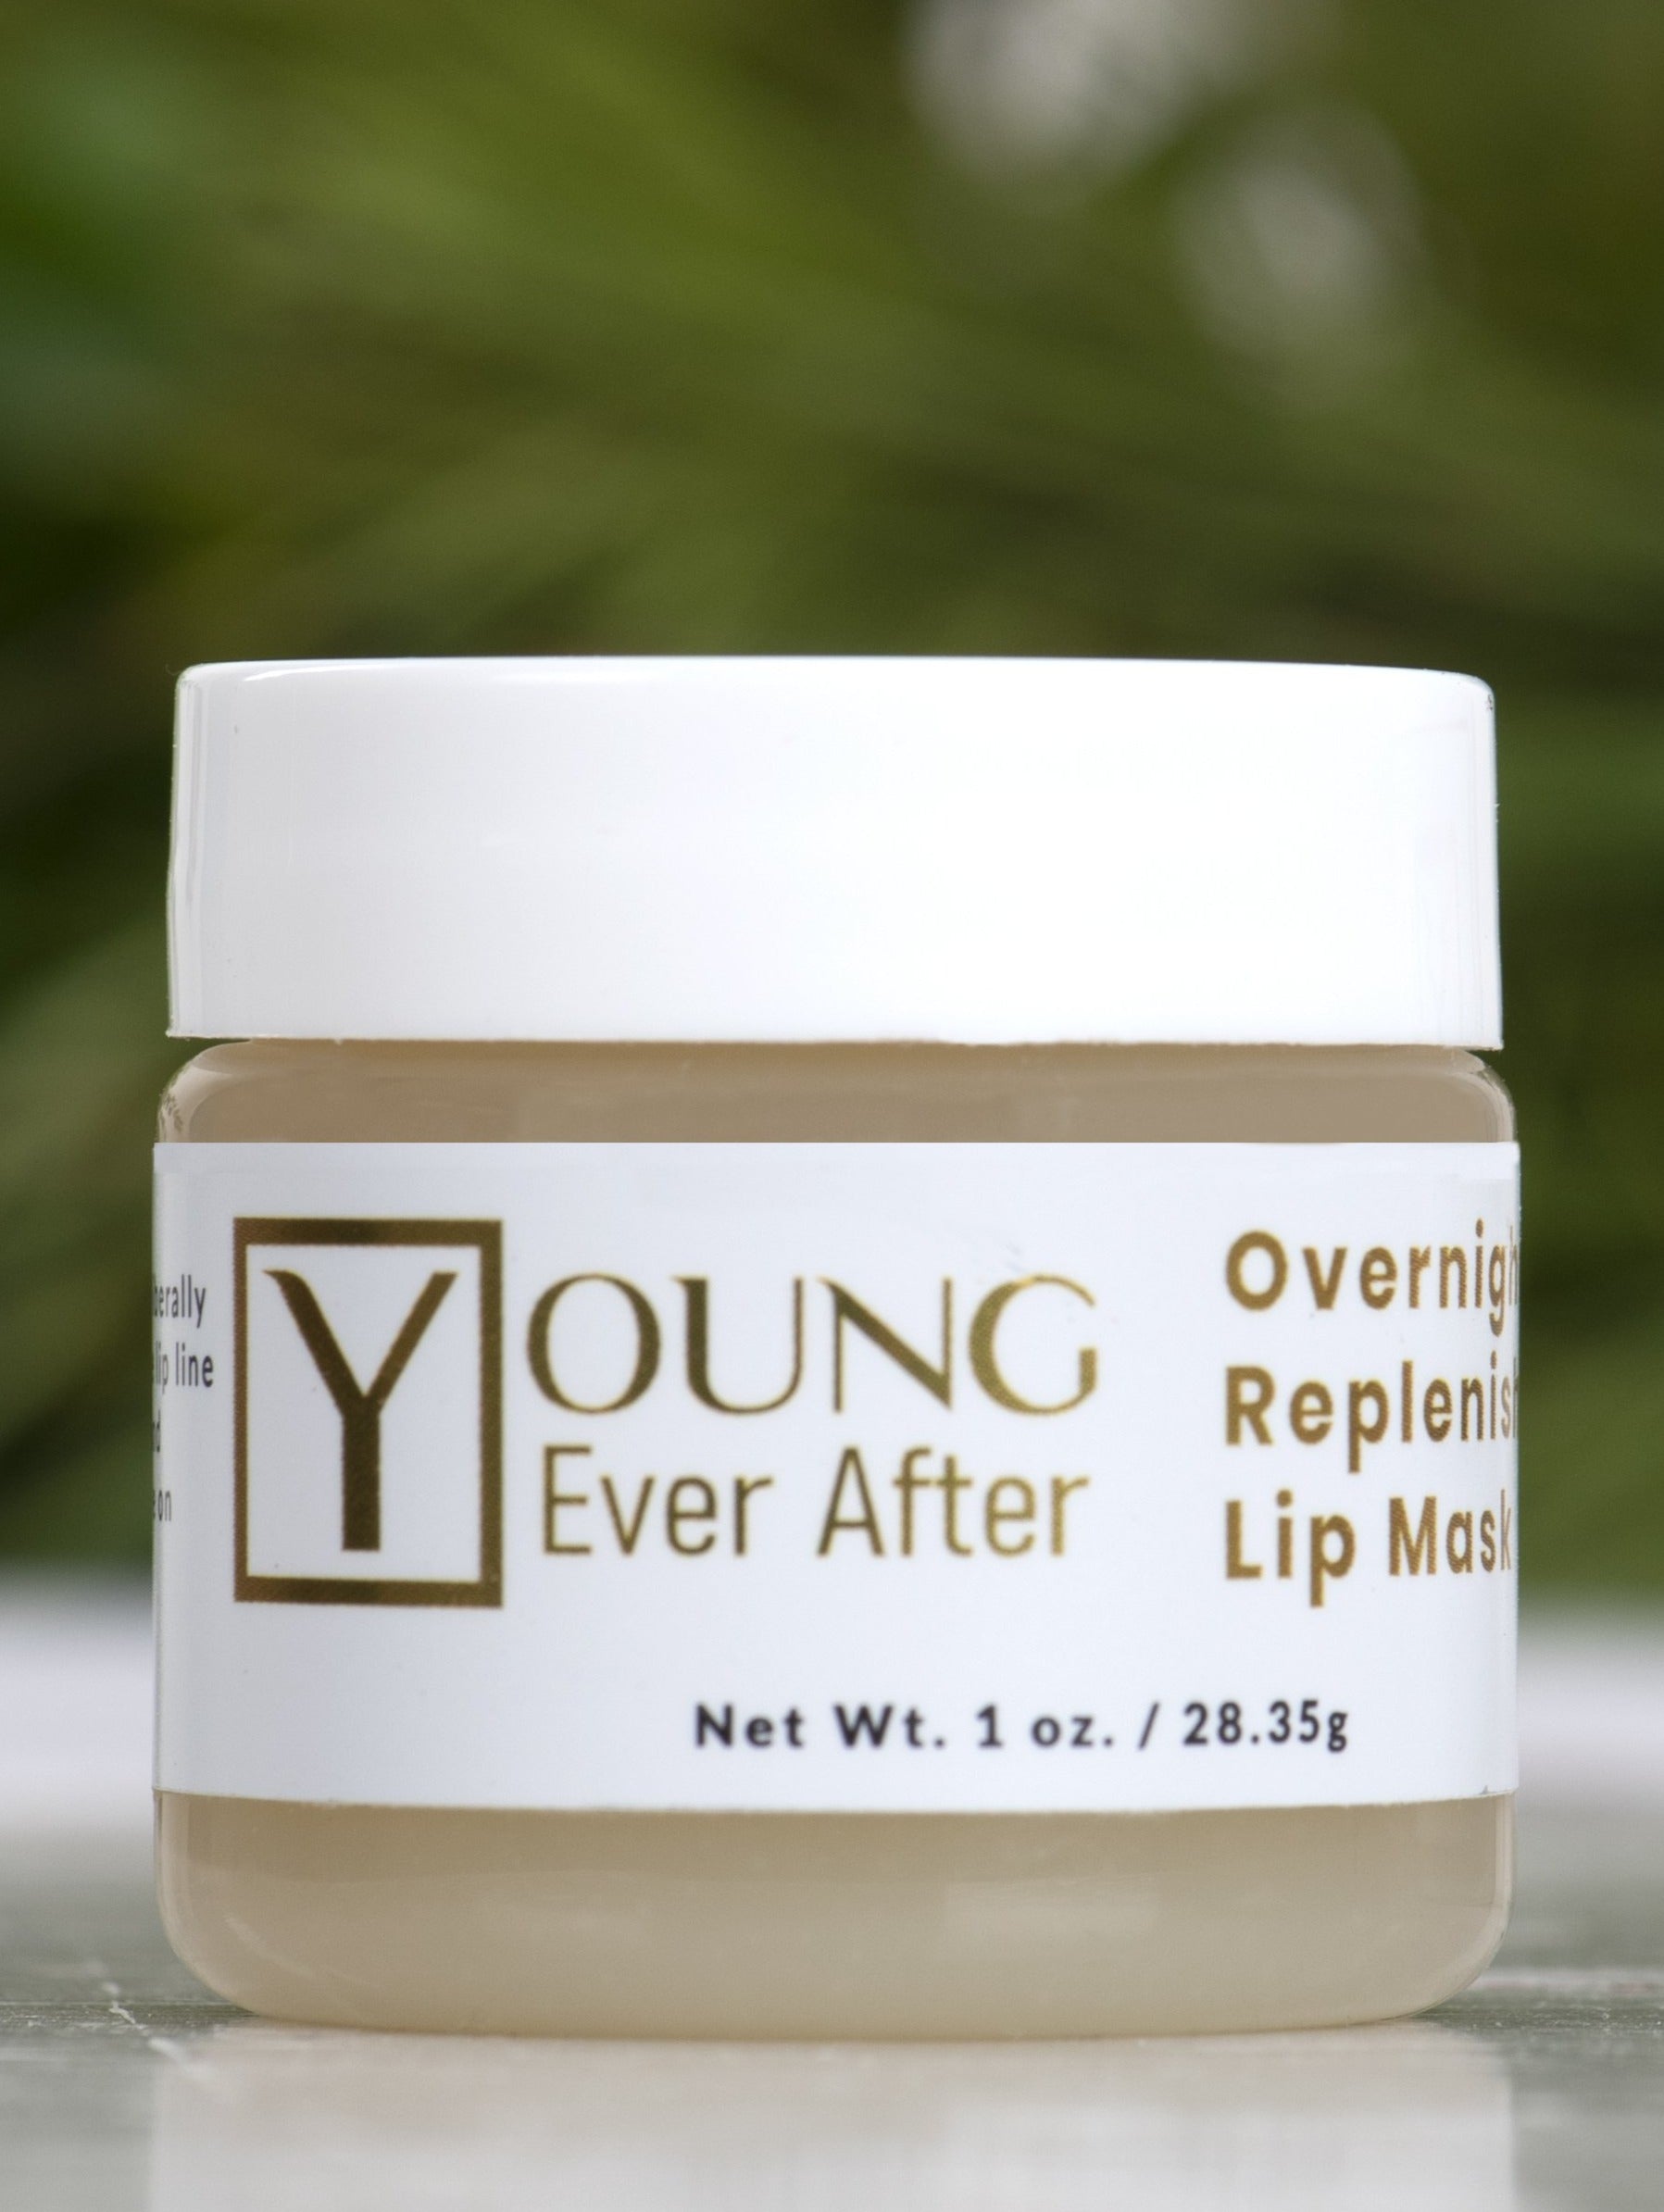 Overnight Replenishing Lip Mask